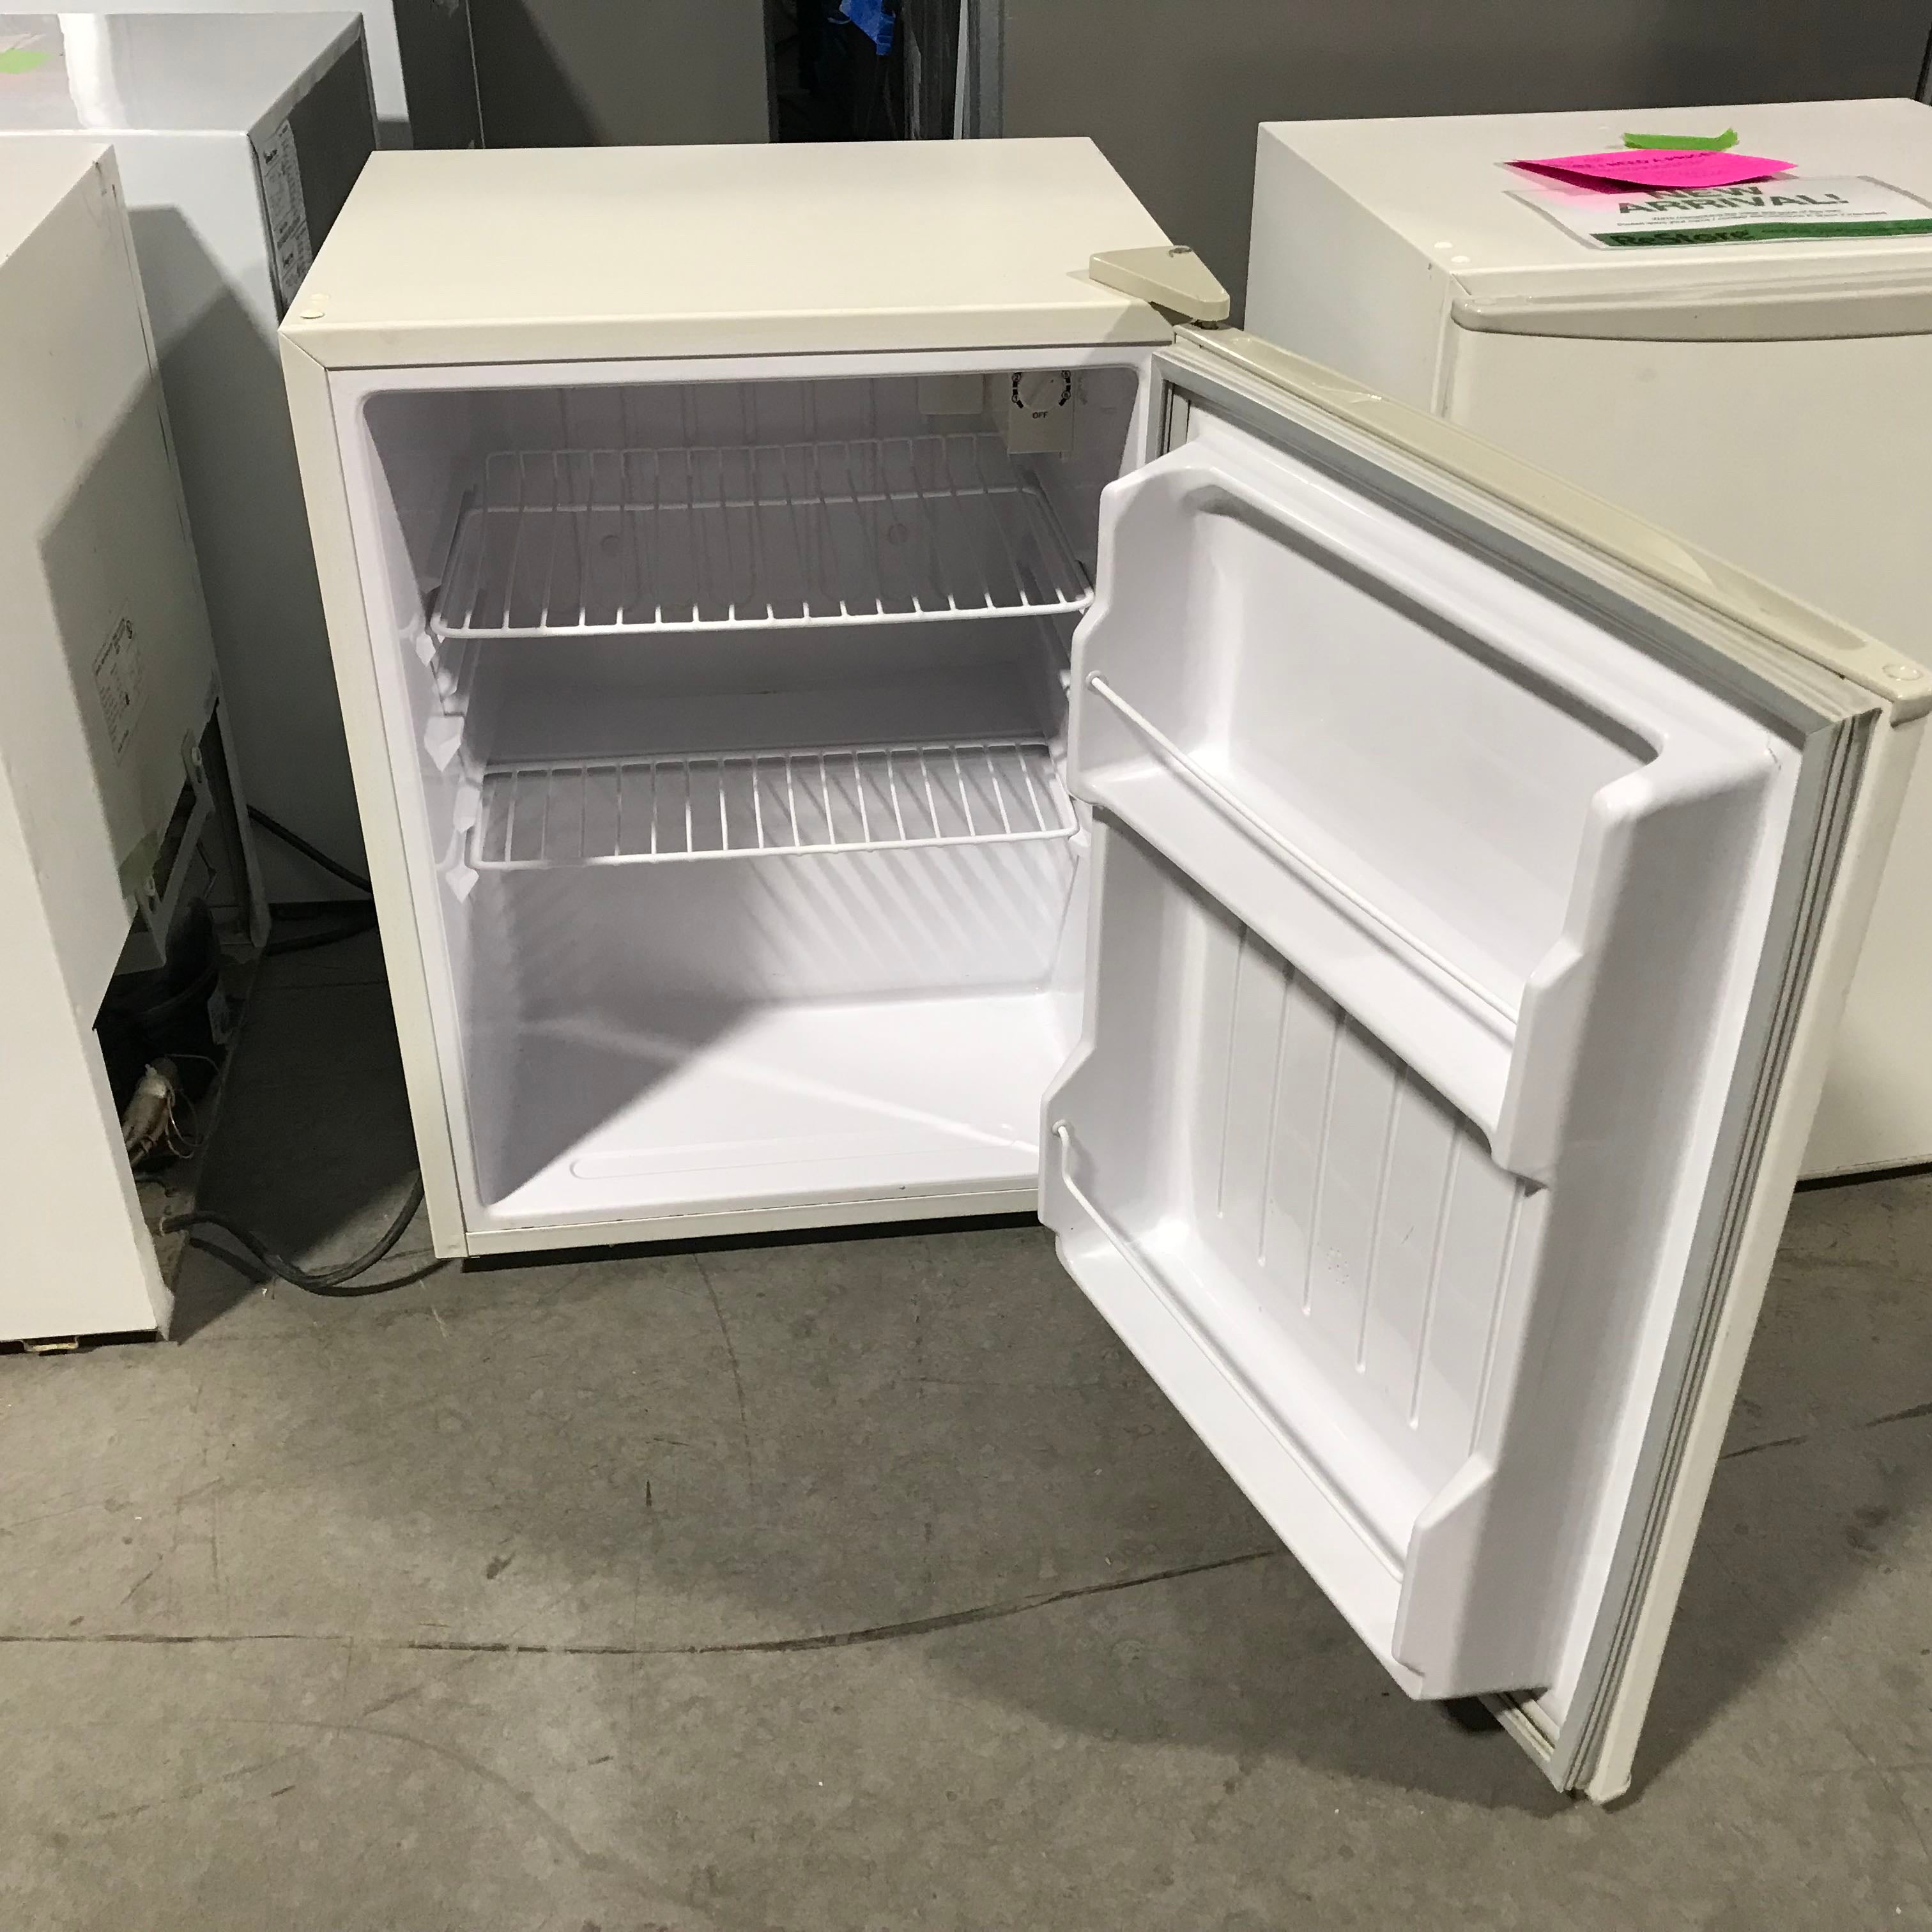 18.5"x 17.5"x 25" Avanti White Mini Refrigerator